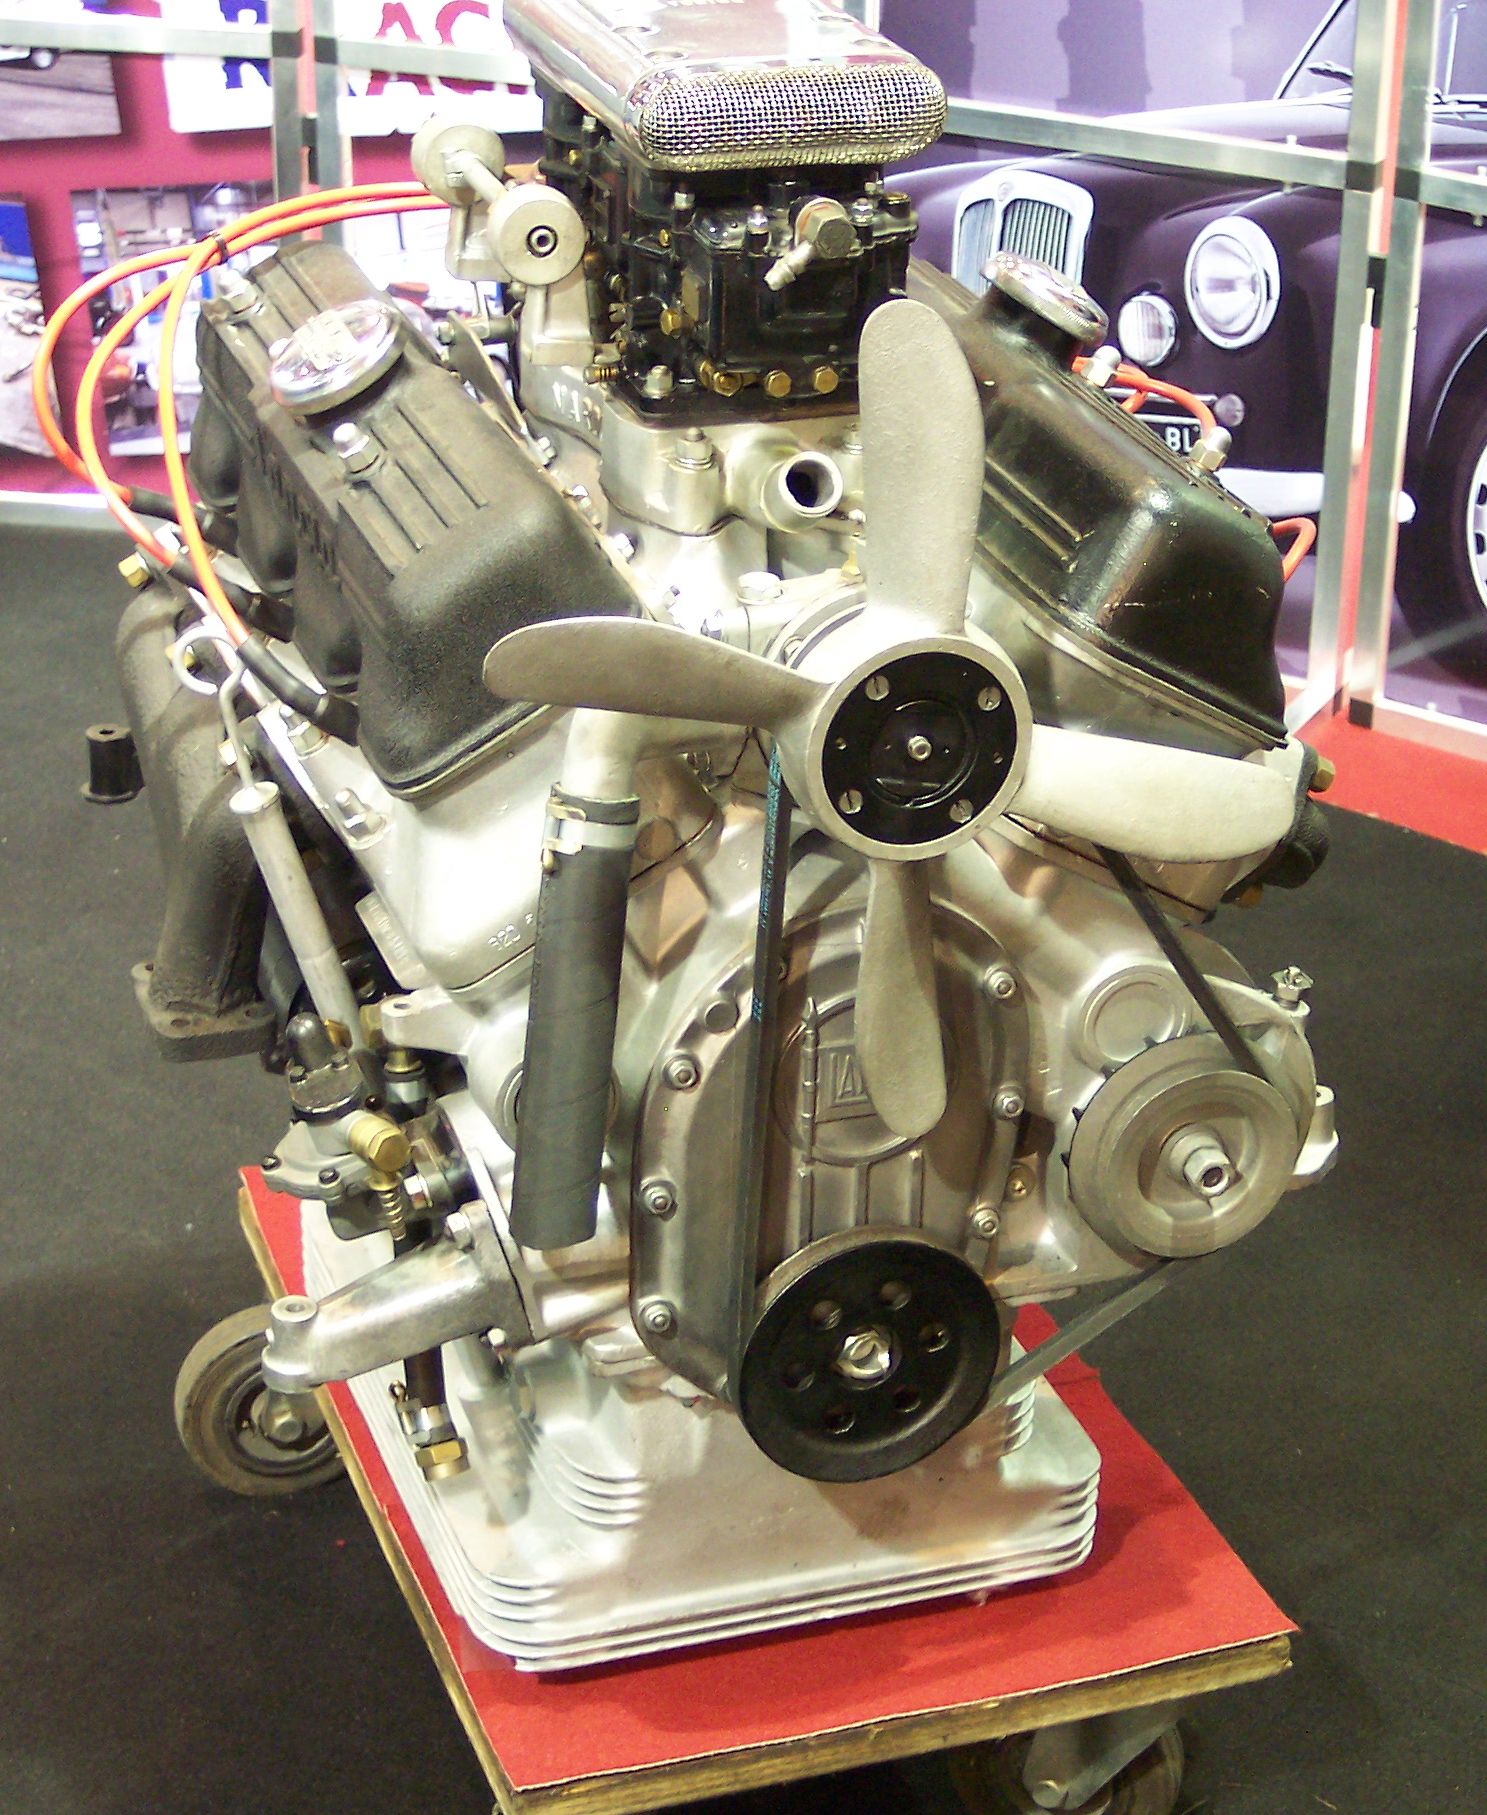  двигатель v6
